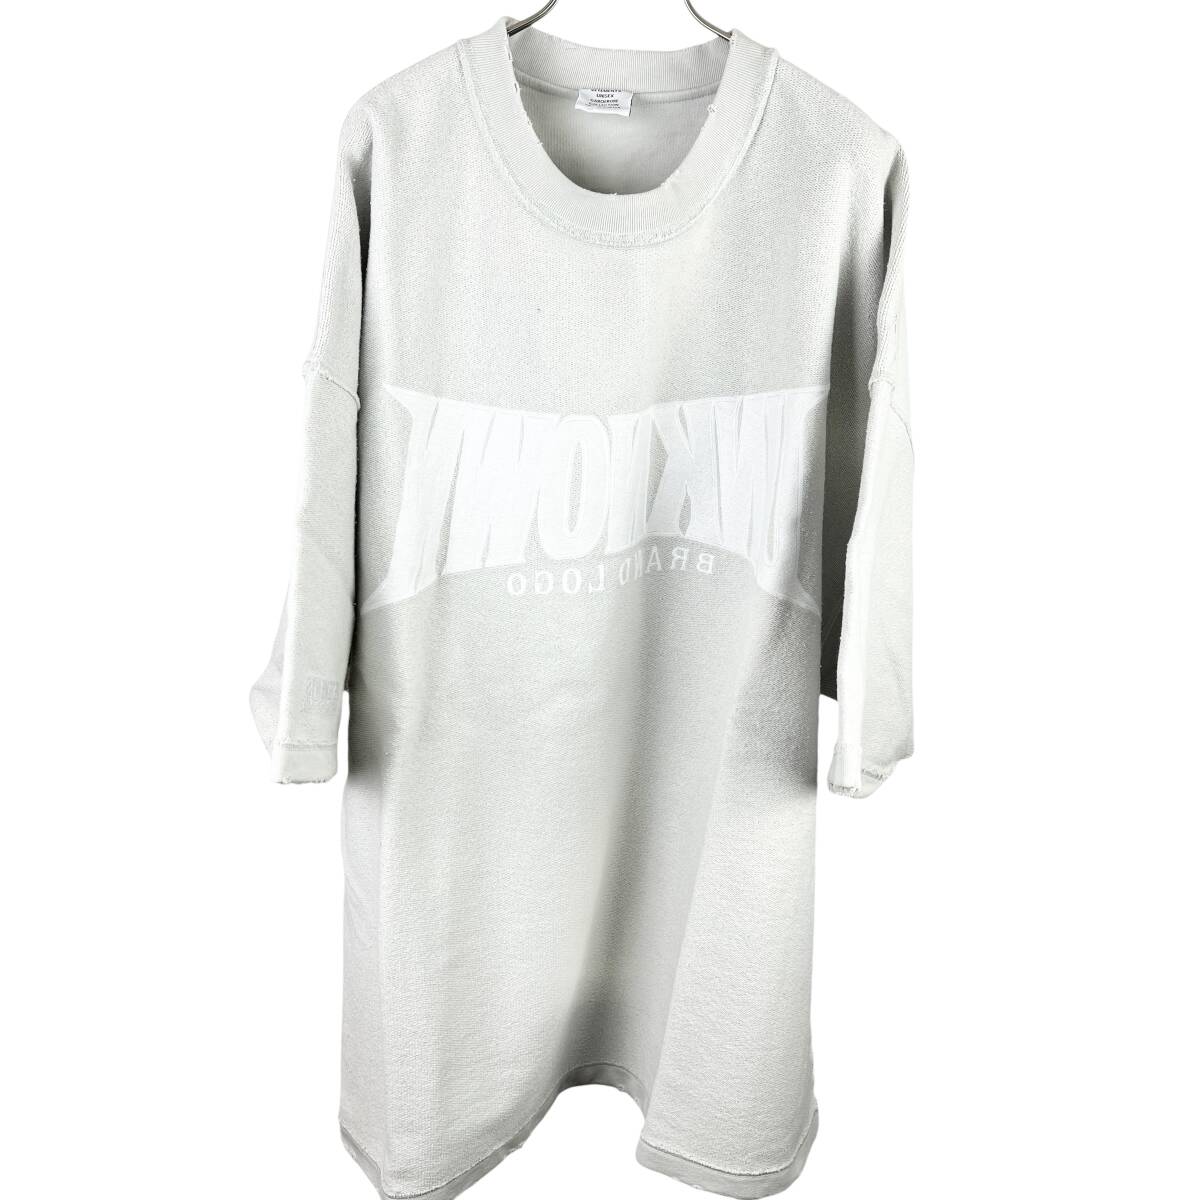 Vetements(ヴェットモン) Mirrored Writing Big Size T Shirt (white)_画像2